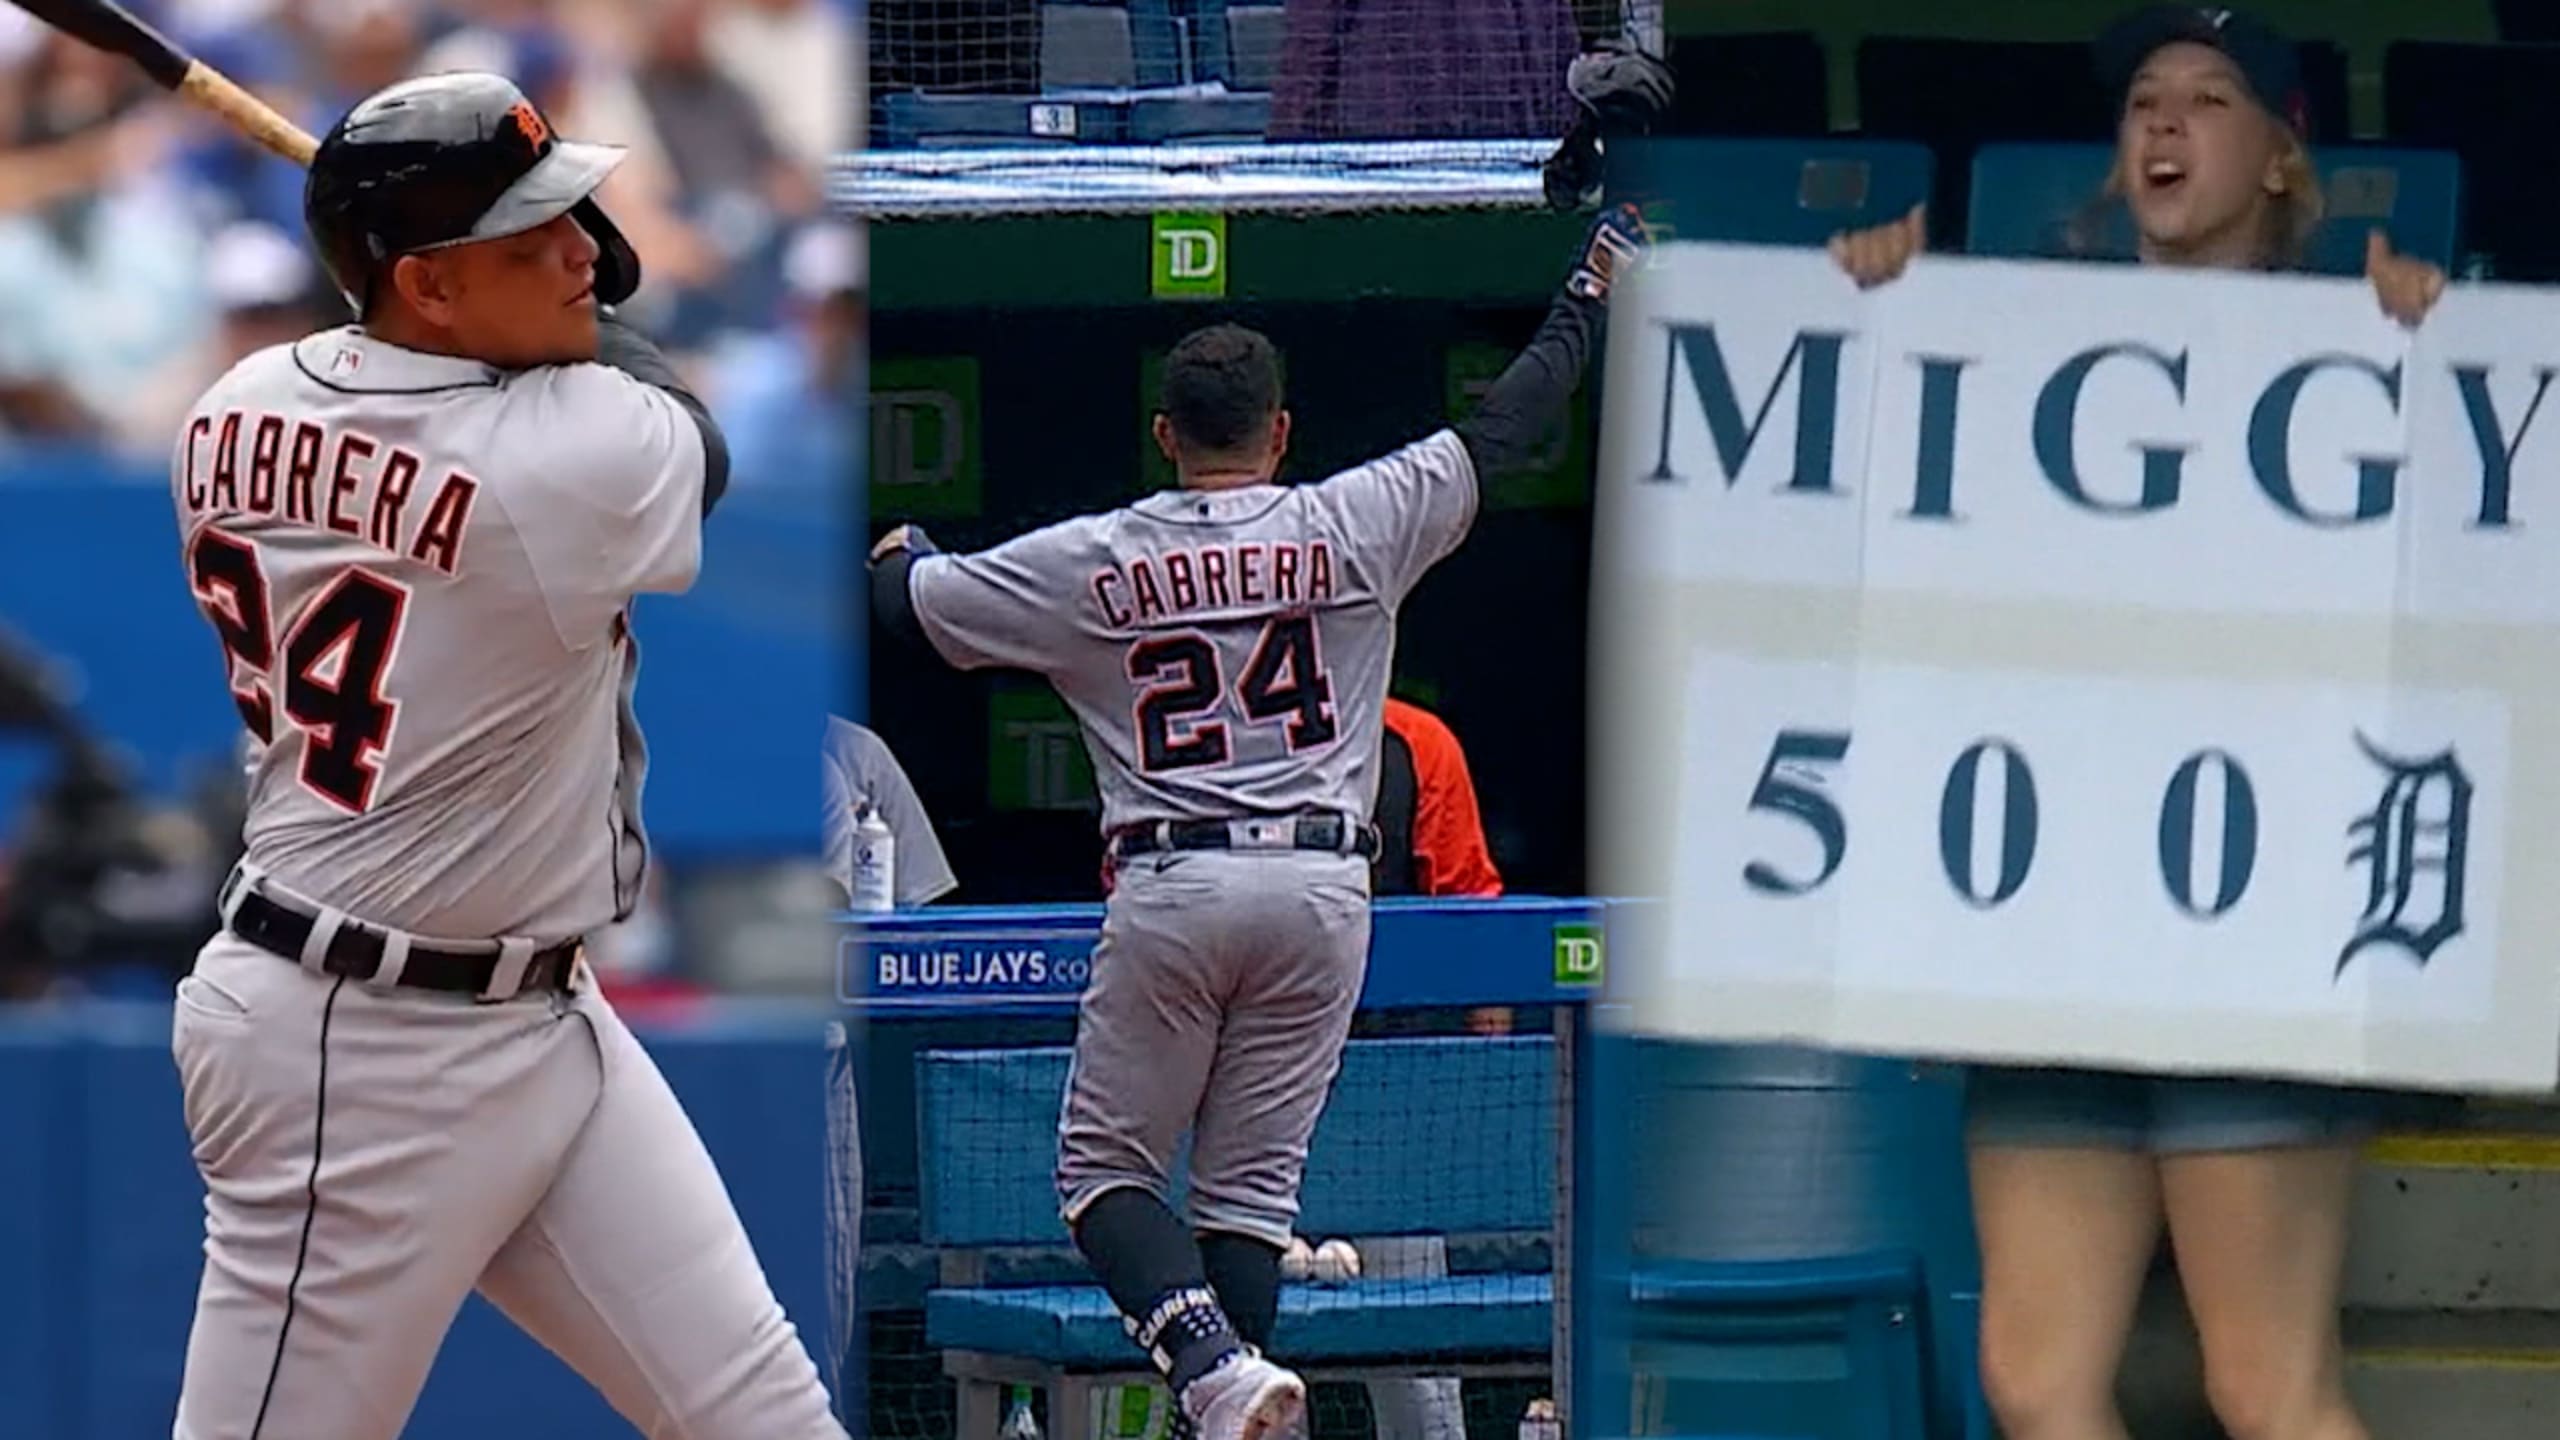 MLB - Miguel Cabrera hit his 500th career home run!